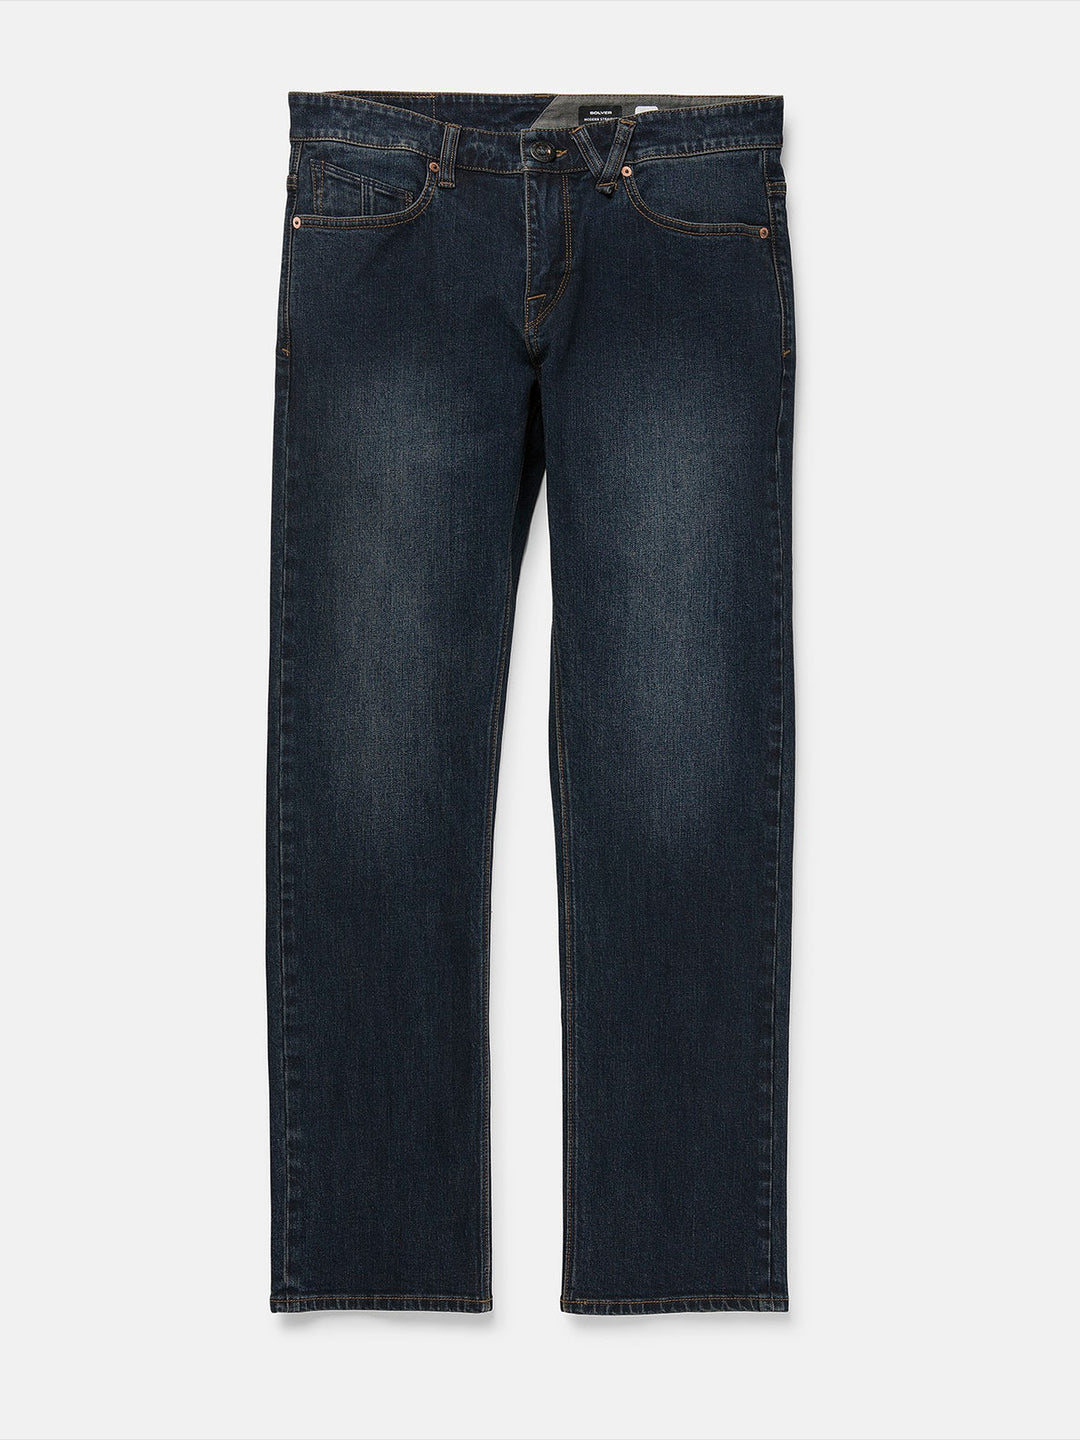 Volcom Solver Modern Fit Jeans - New Vintage Blue - Sun Diego Boardshop